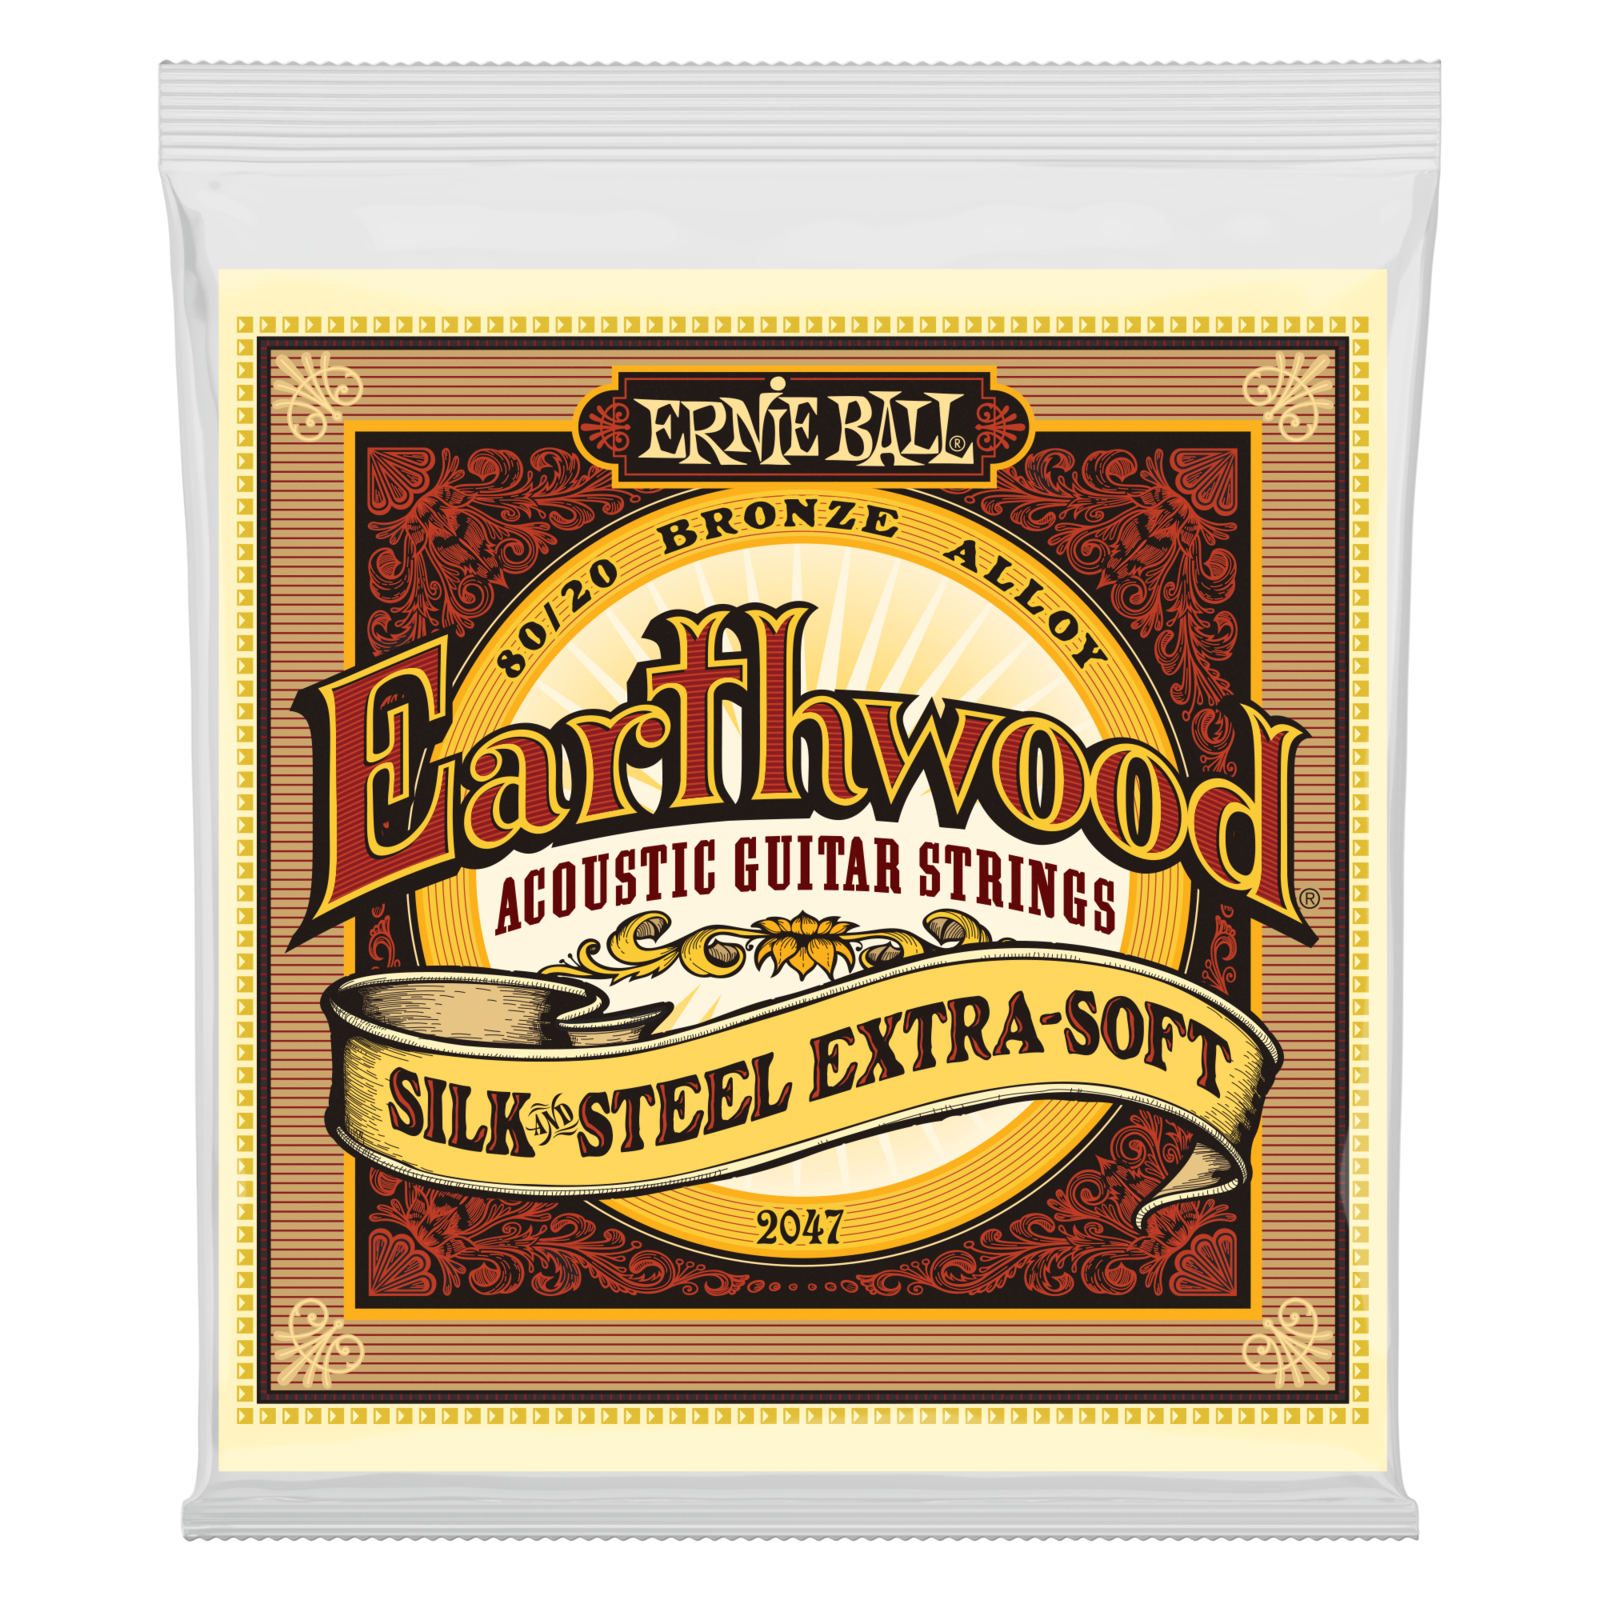 Guitar strings Ernie Ball 2047 Earthwood Silk & Steel